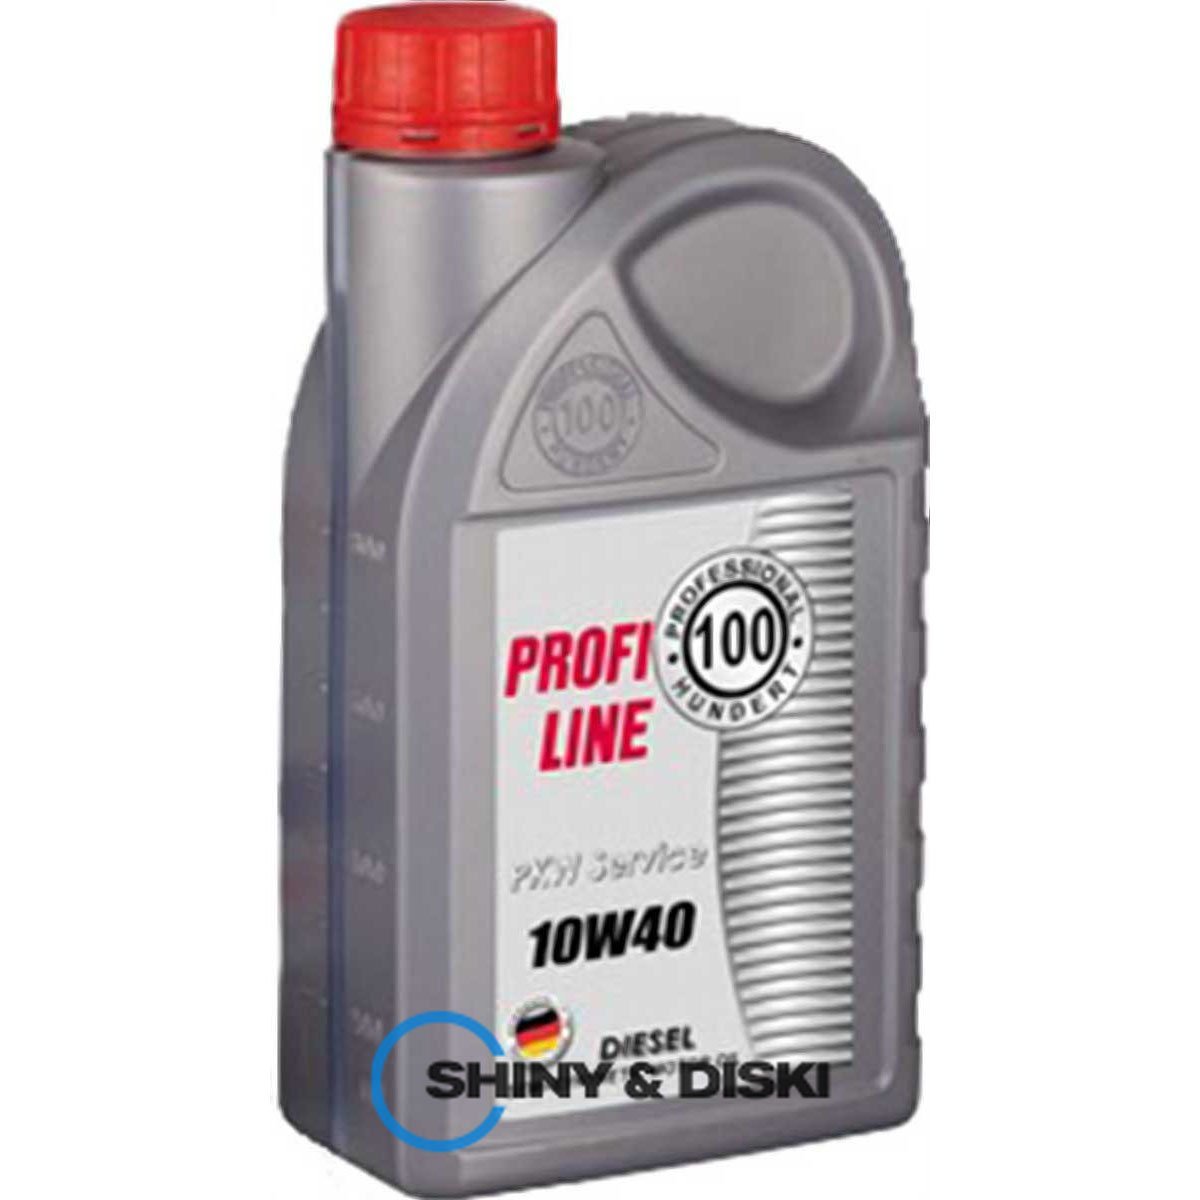 professional hundert profi line diesel